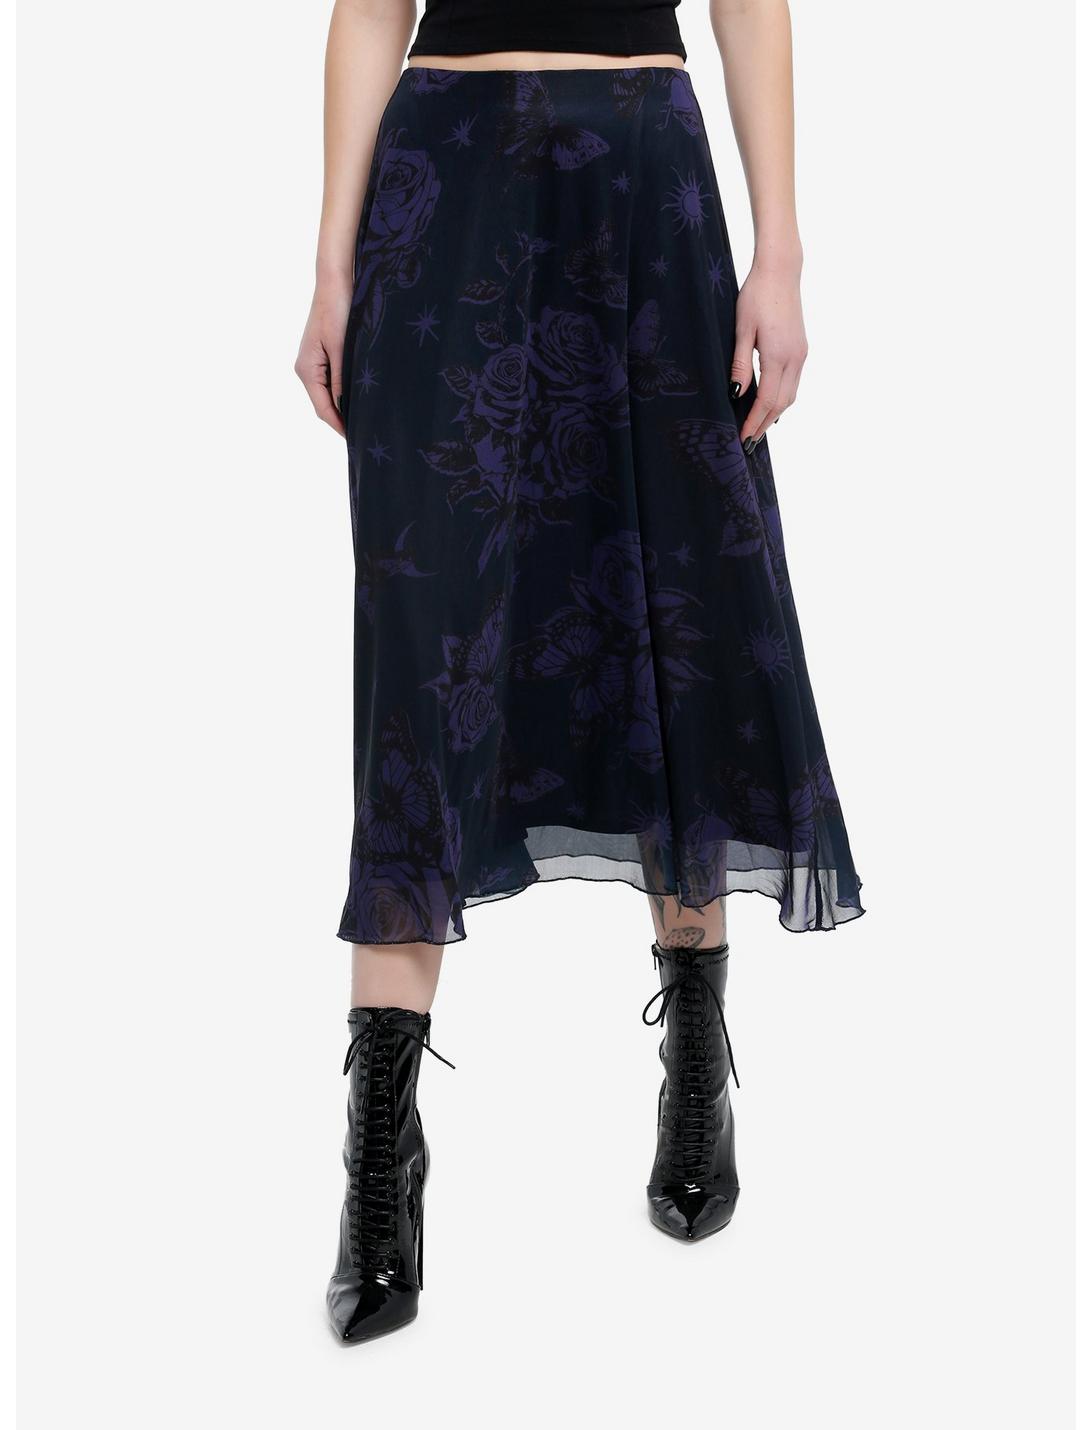 Cosmic Aura Purple & Black Floral Midi Skirt, BROWN, hi-res